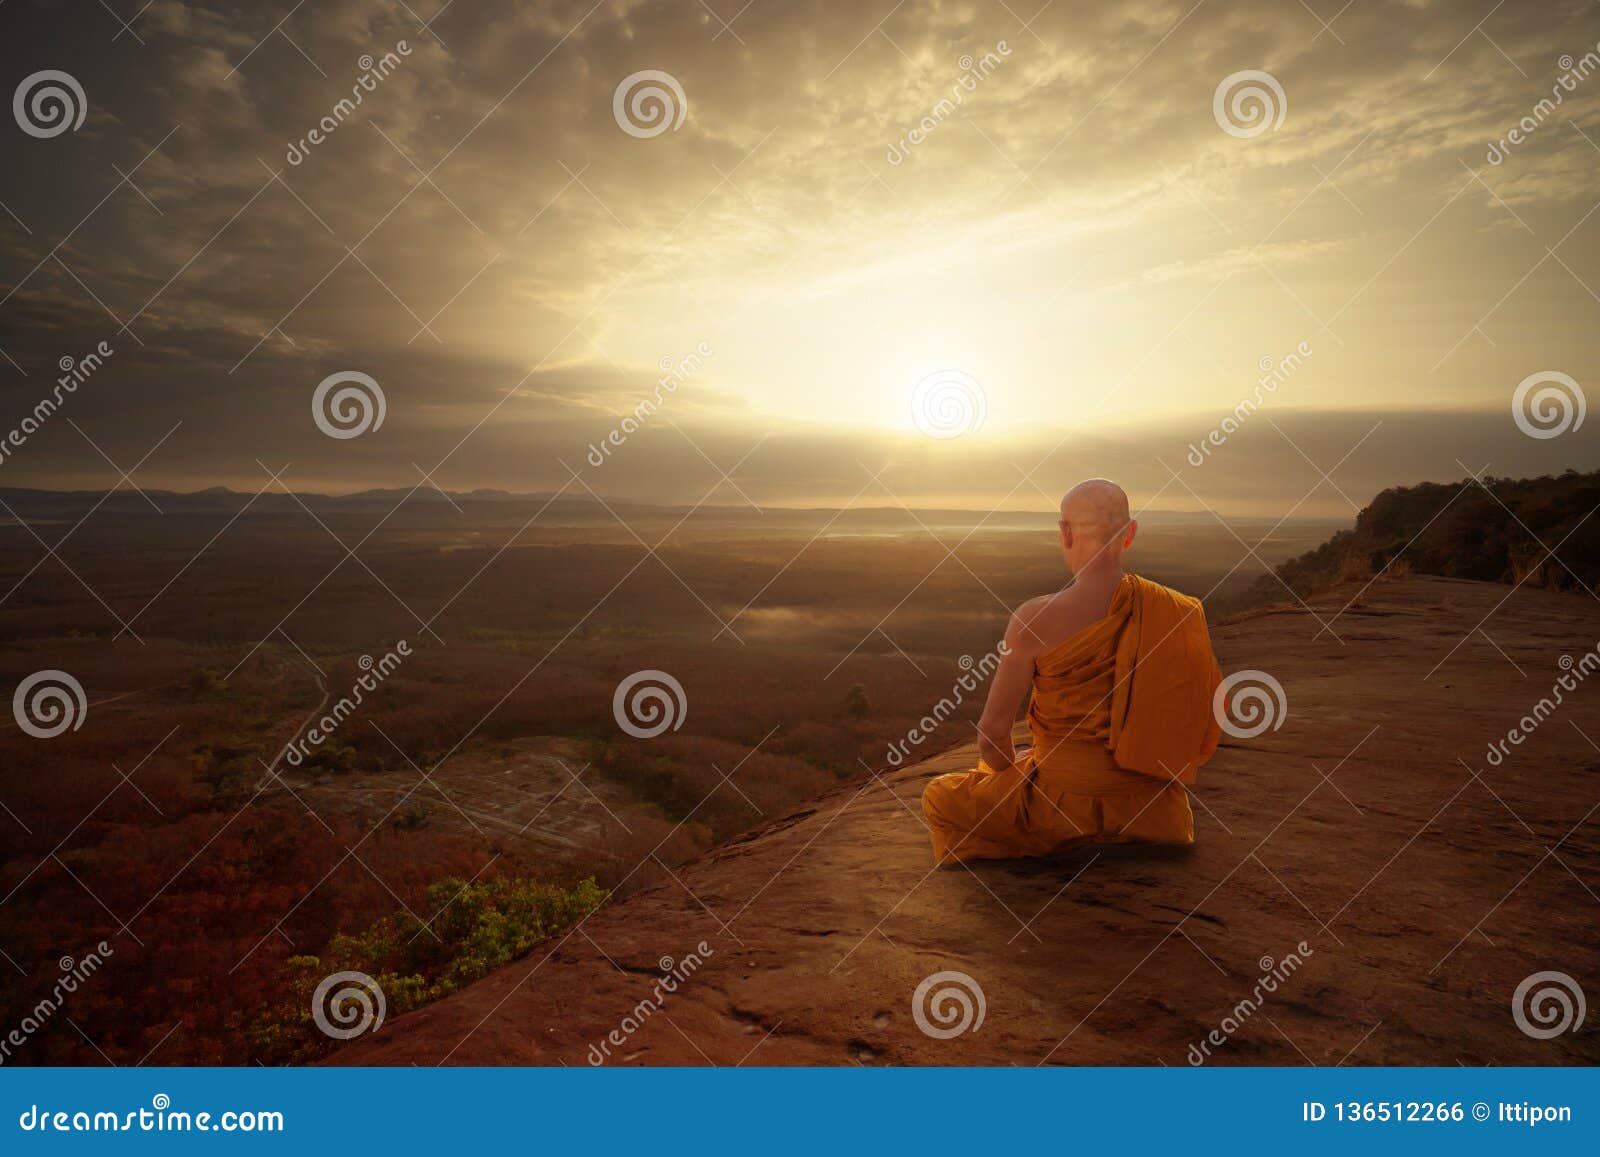 buddhist monk in meditation at beautiful sunset or sunrise background